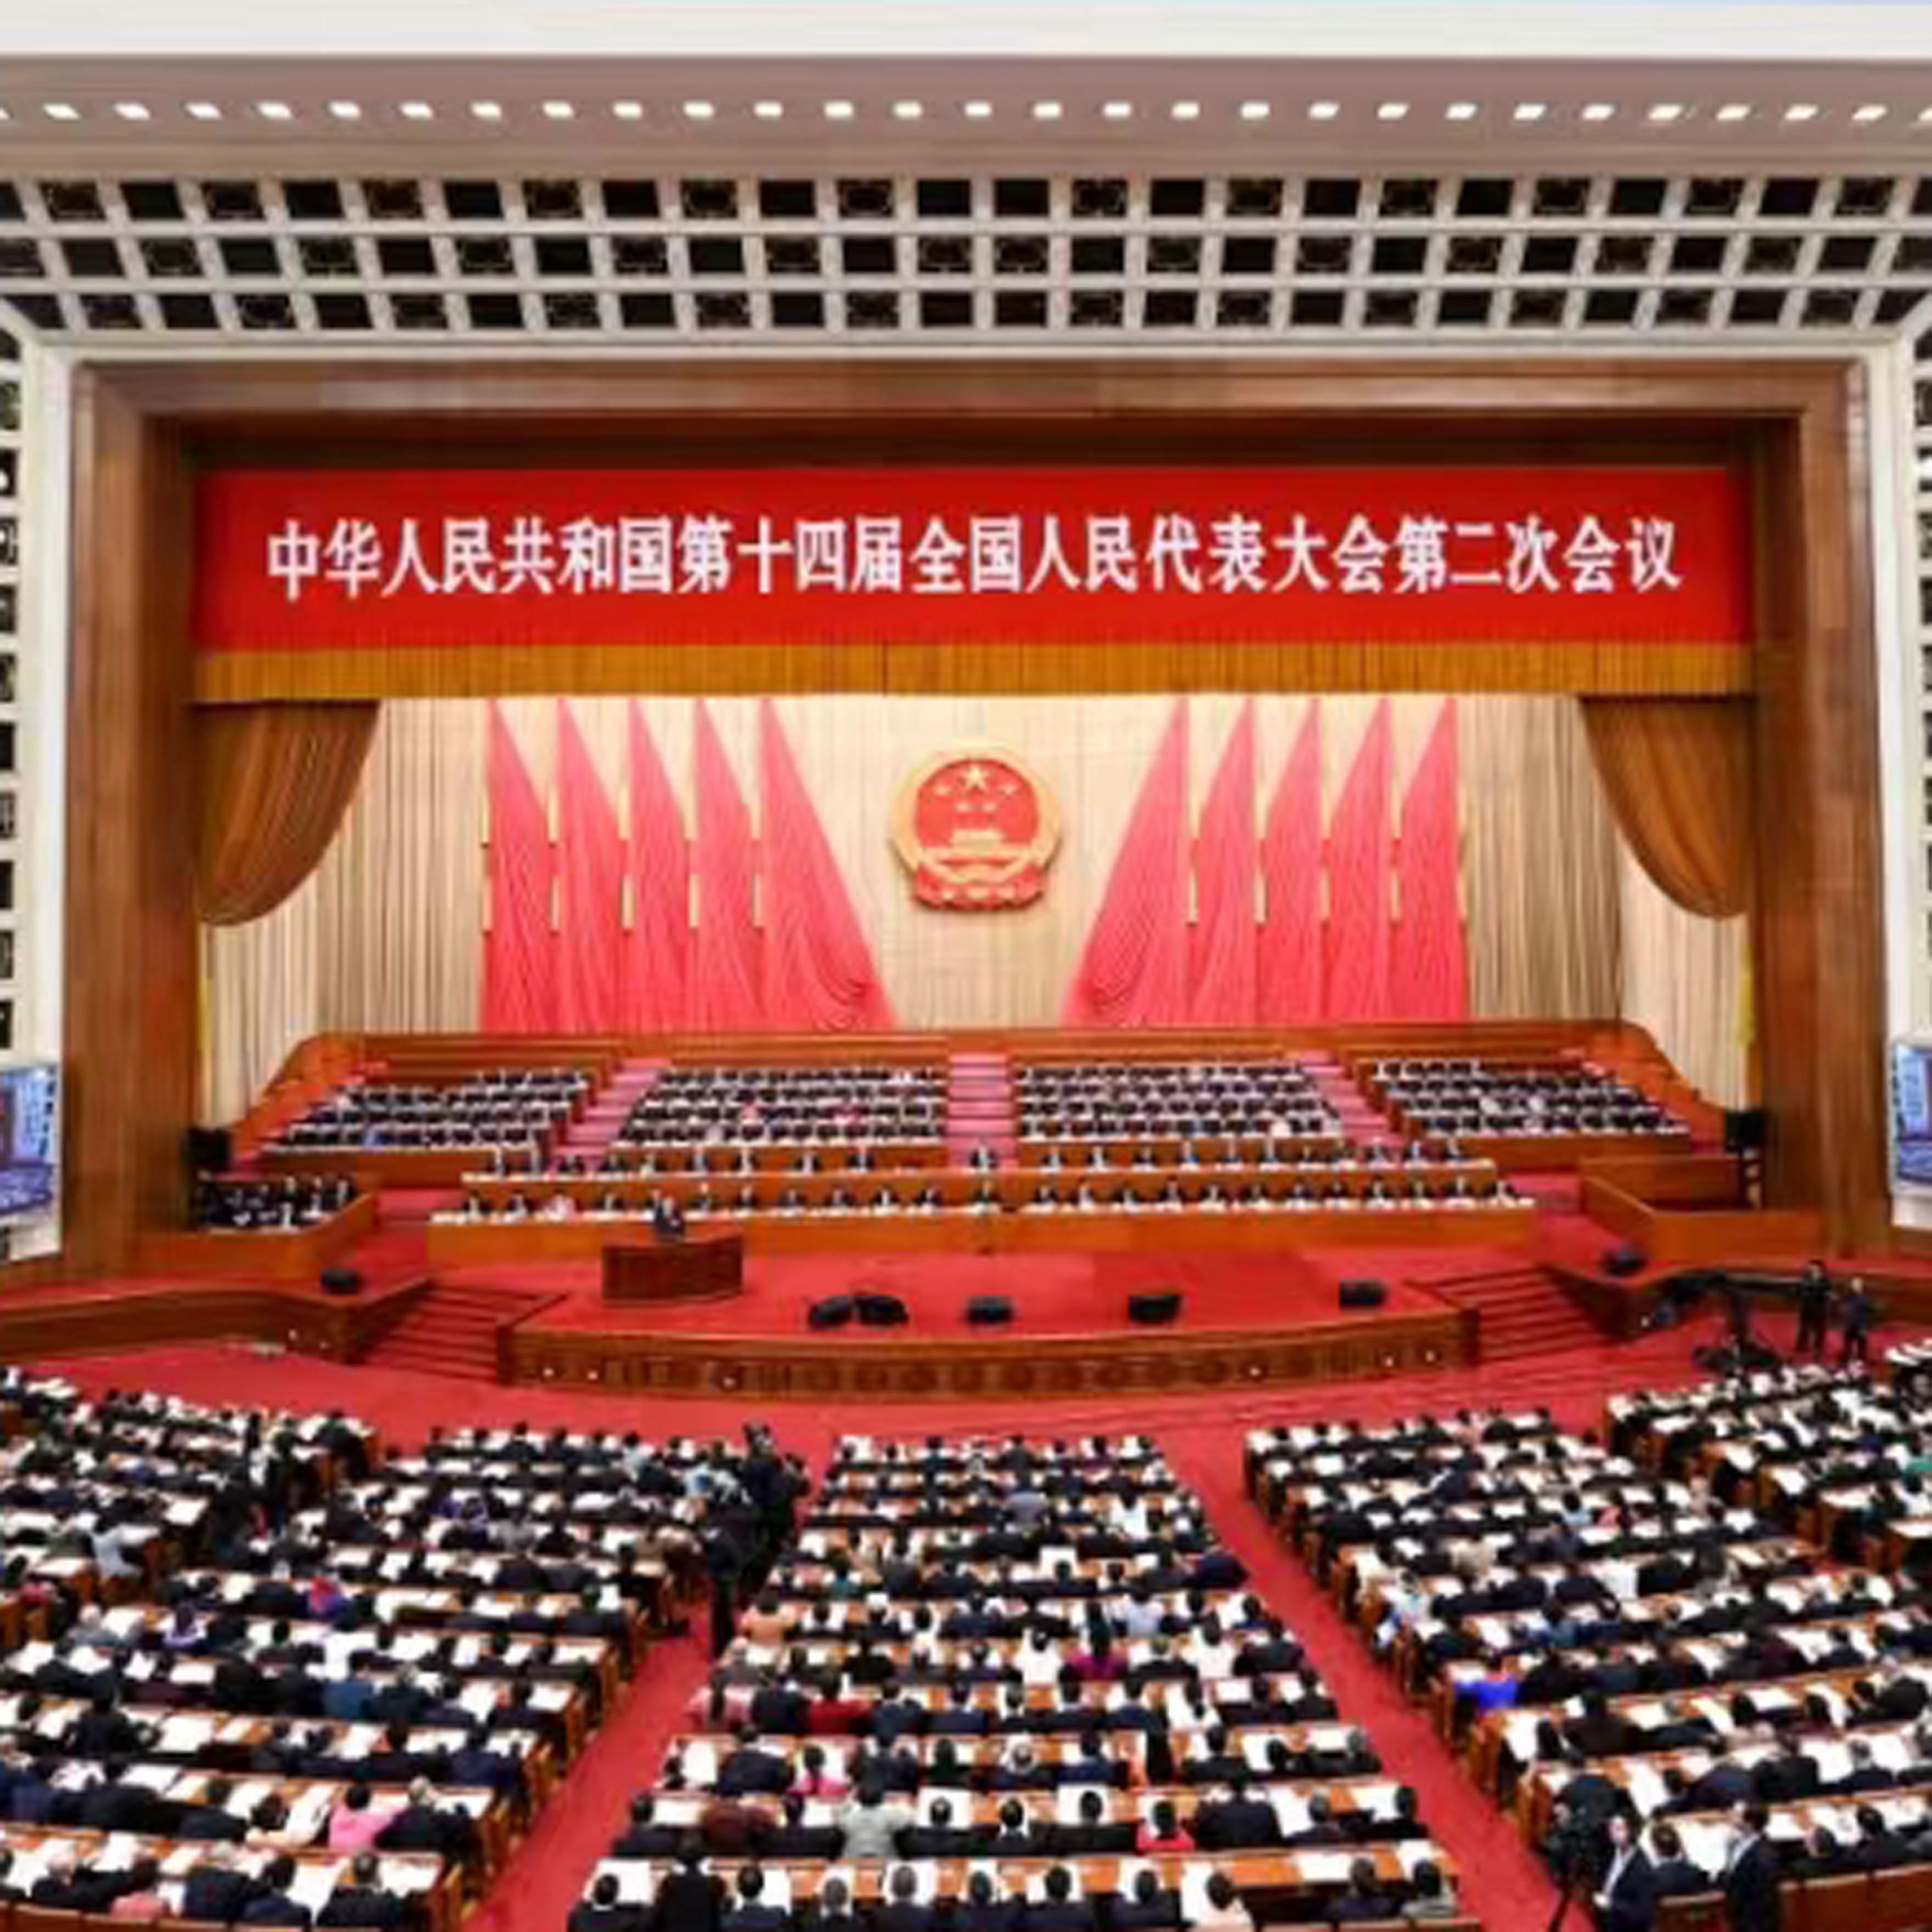 China's top legislature delivers annual report, highlighting modernization efforts